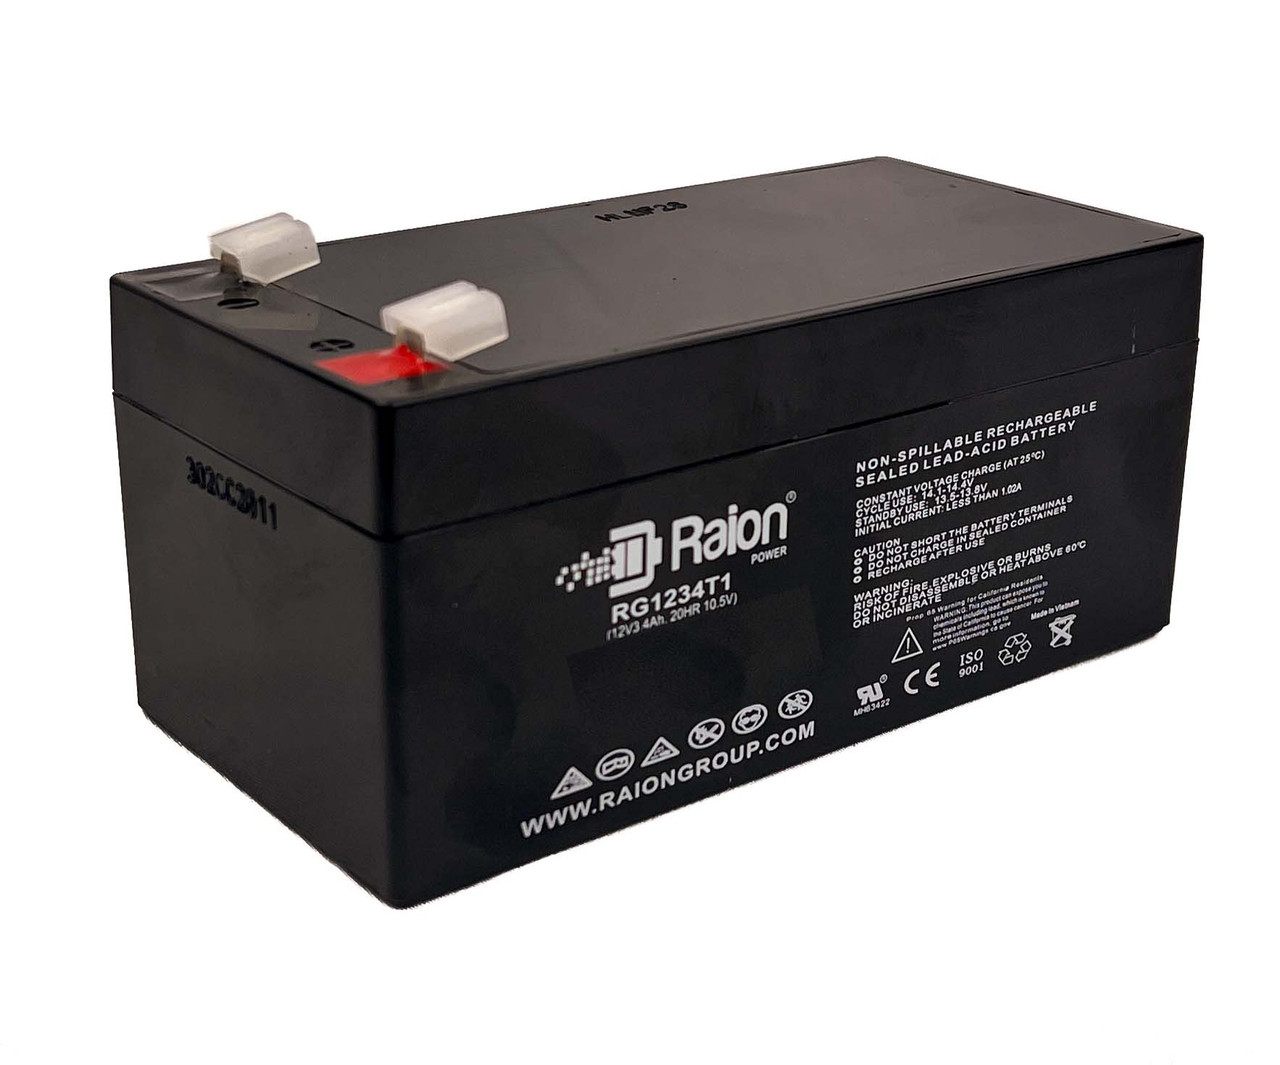 Raion Power 12V 3.4Ah Non-Spillable Replacement Battery for Douglas DG123